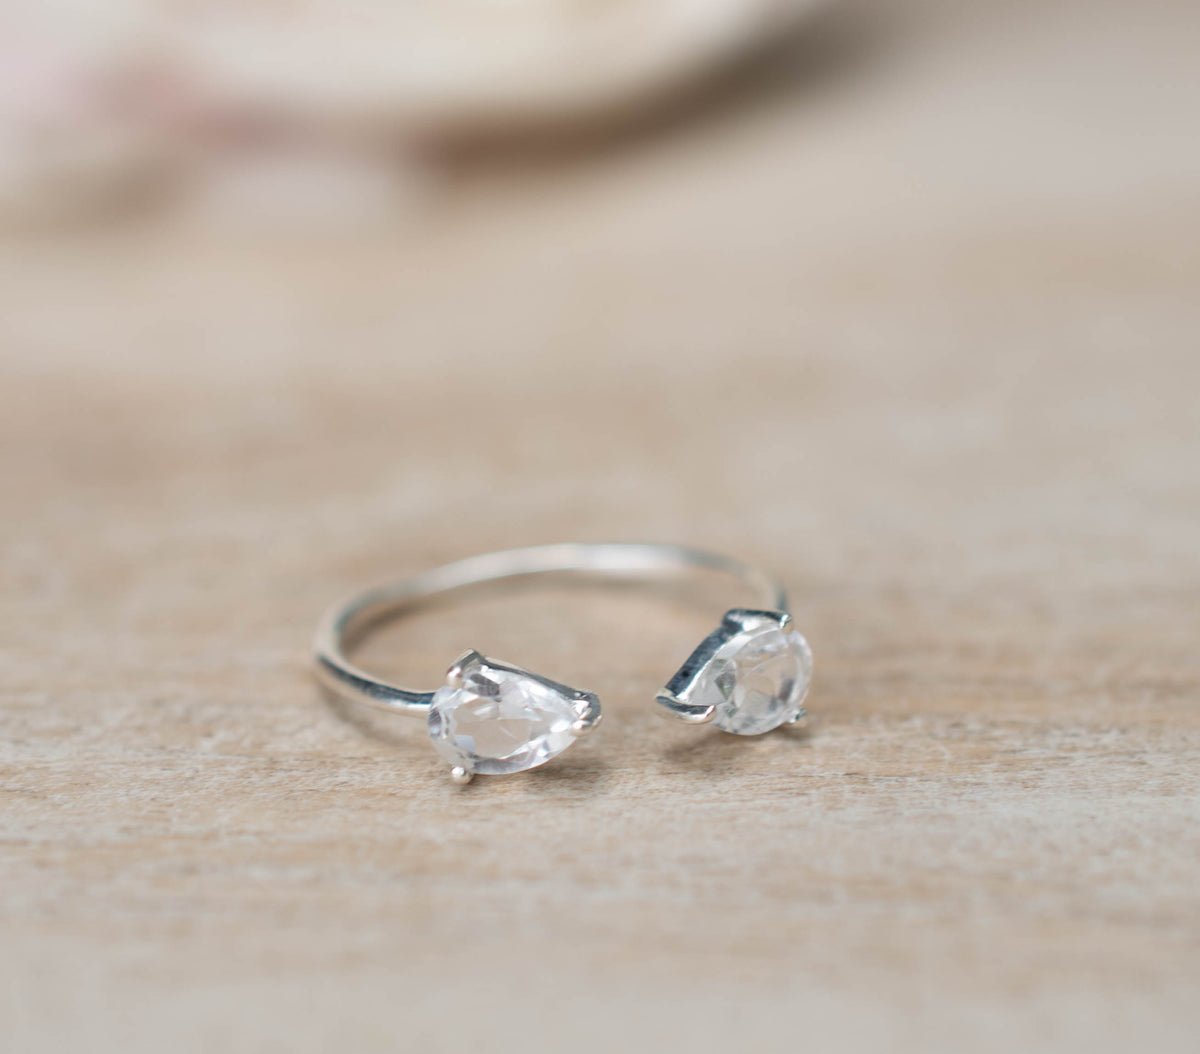 SALE Adjustable White Topaz Ring * Gold Vermeil,Rose Gold Vermeil or Sterling Silver Ring * Gemstone Ring * Wedding * Engagement BJR046